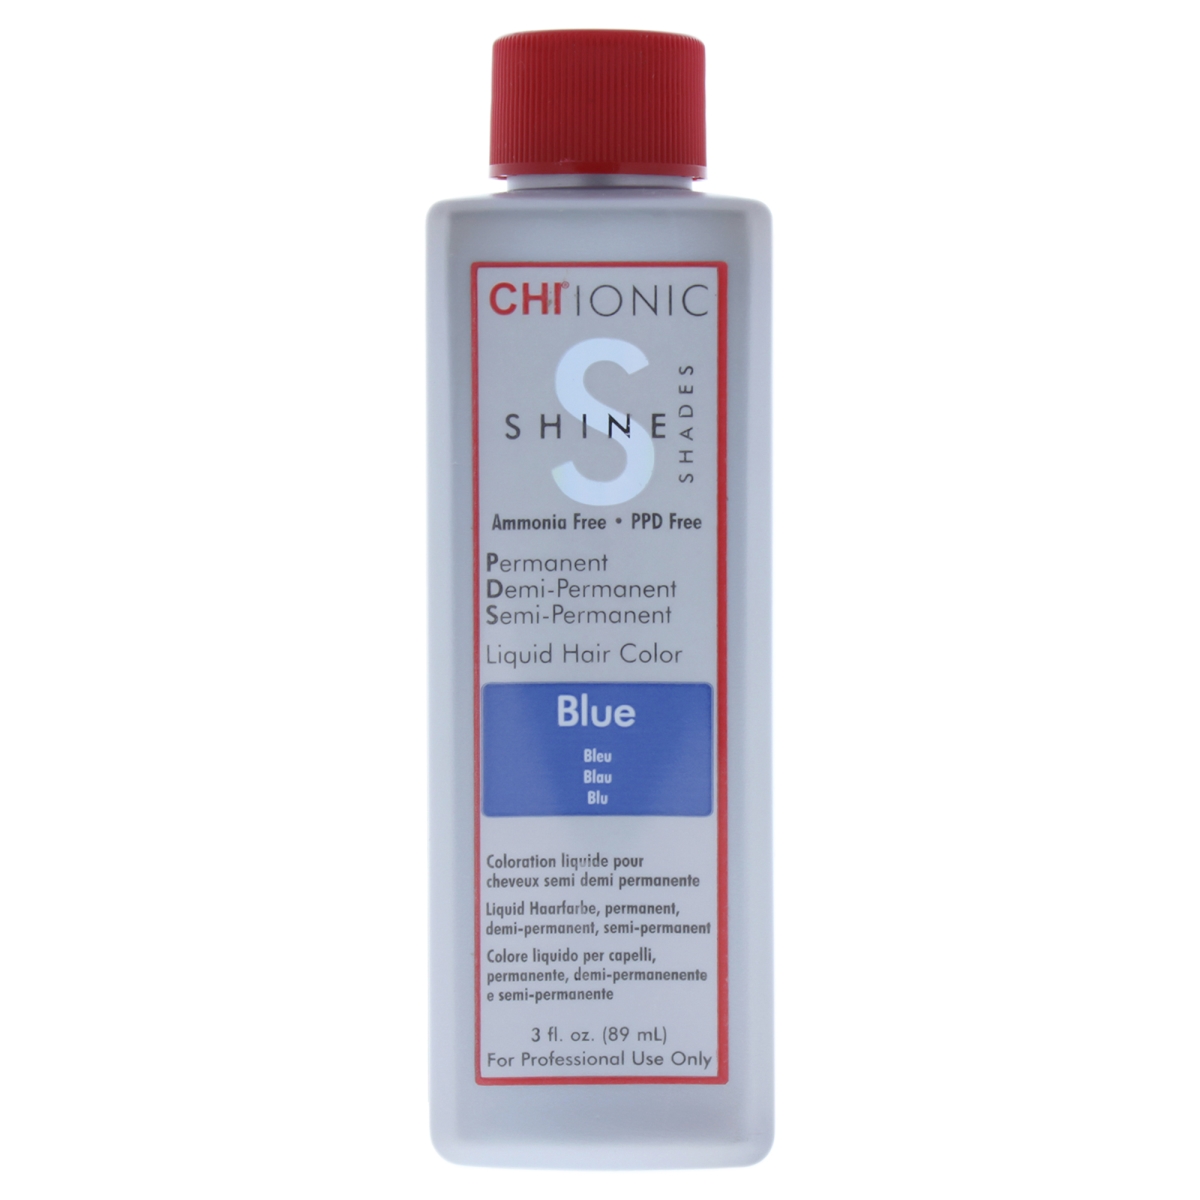 I0084058 Ionic Shine Shades Liquid Hair Color For Unisex - Blue - 3 Oz